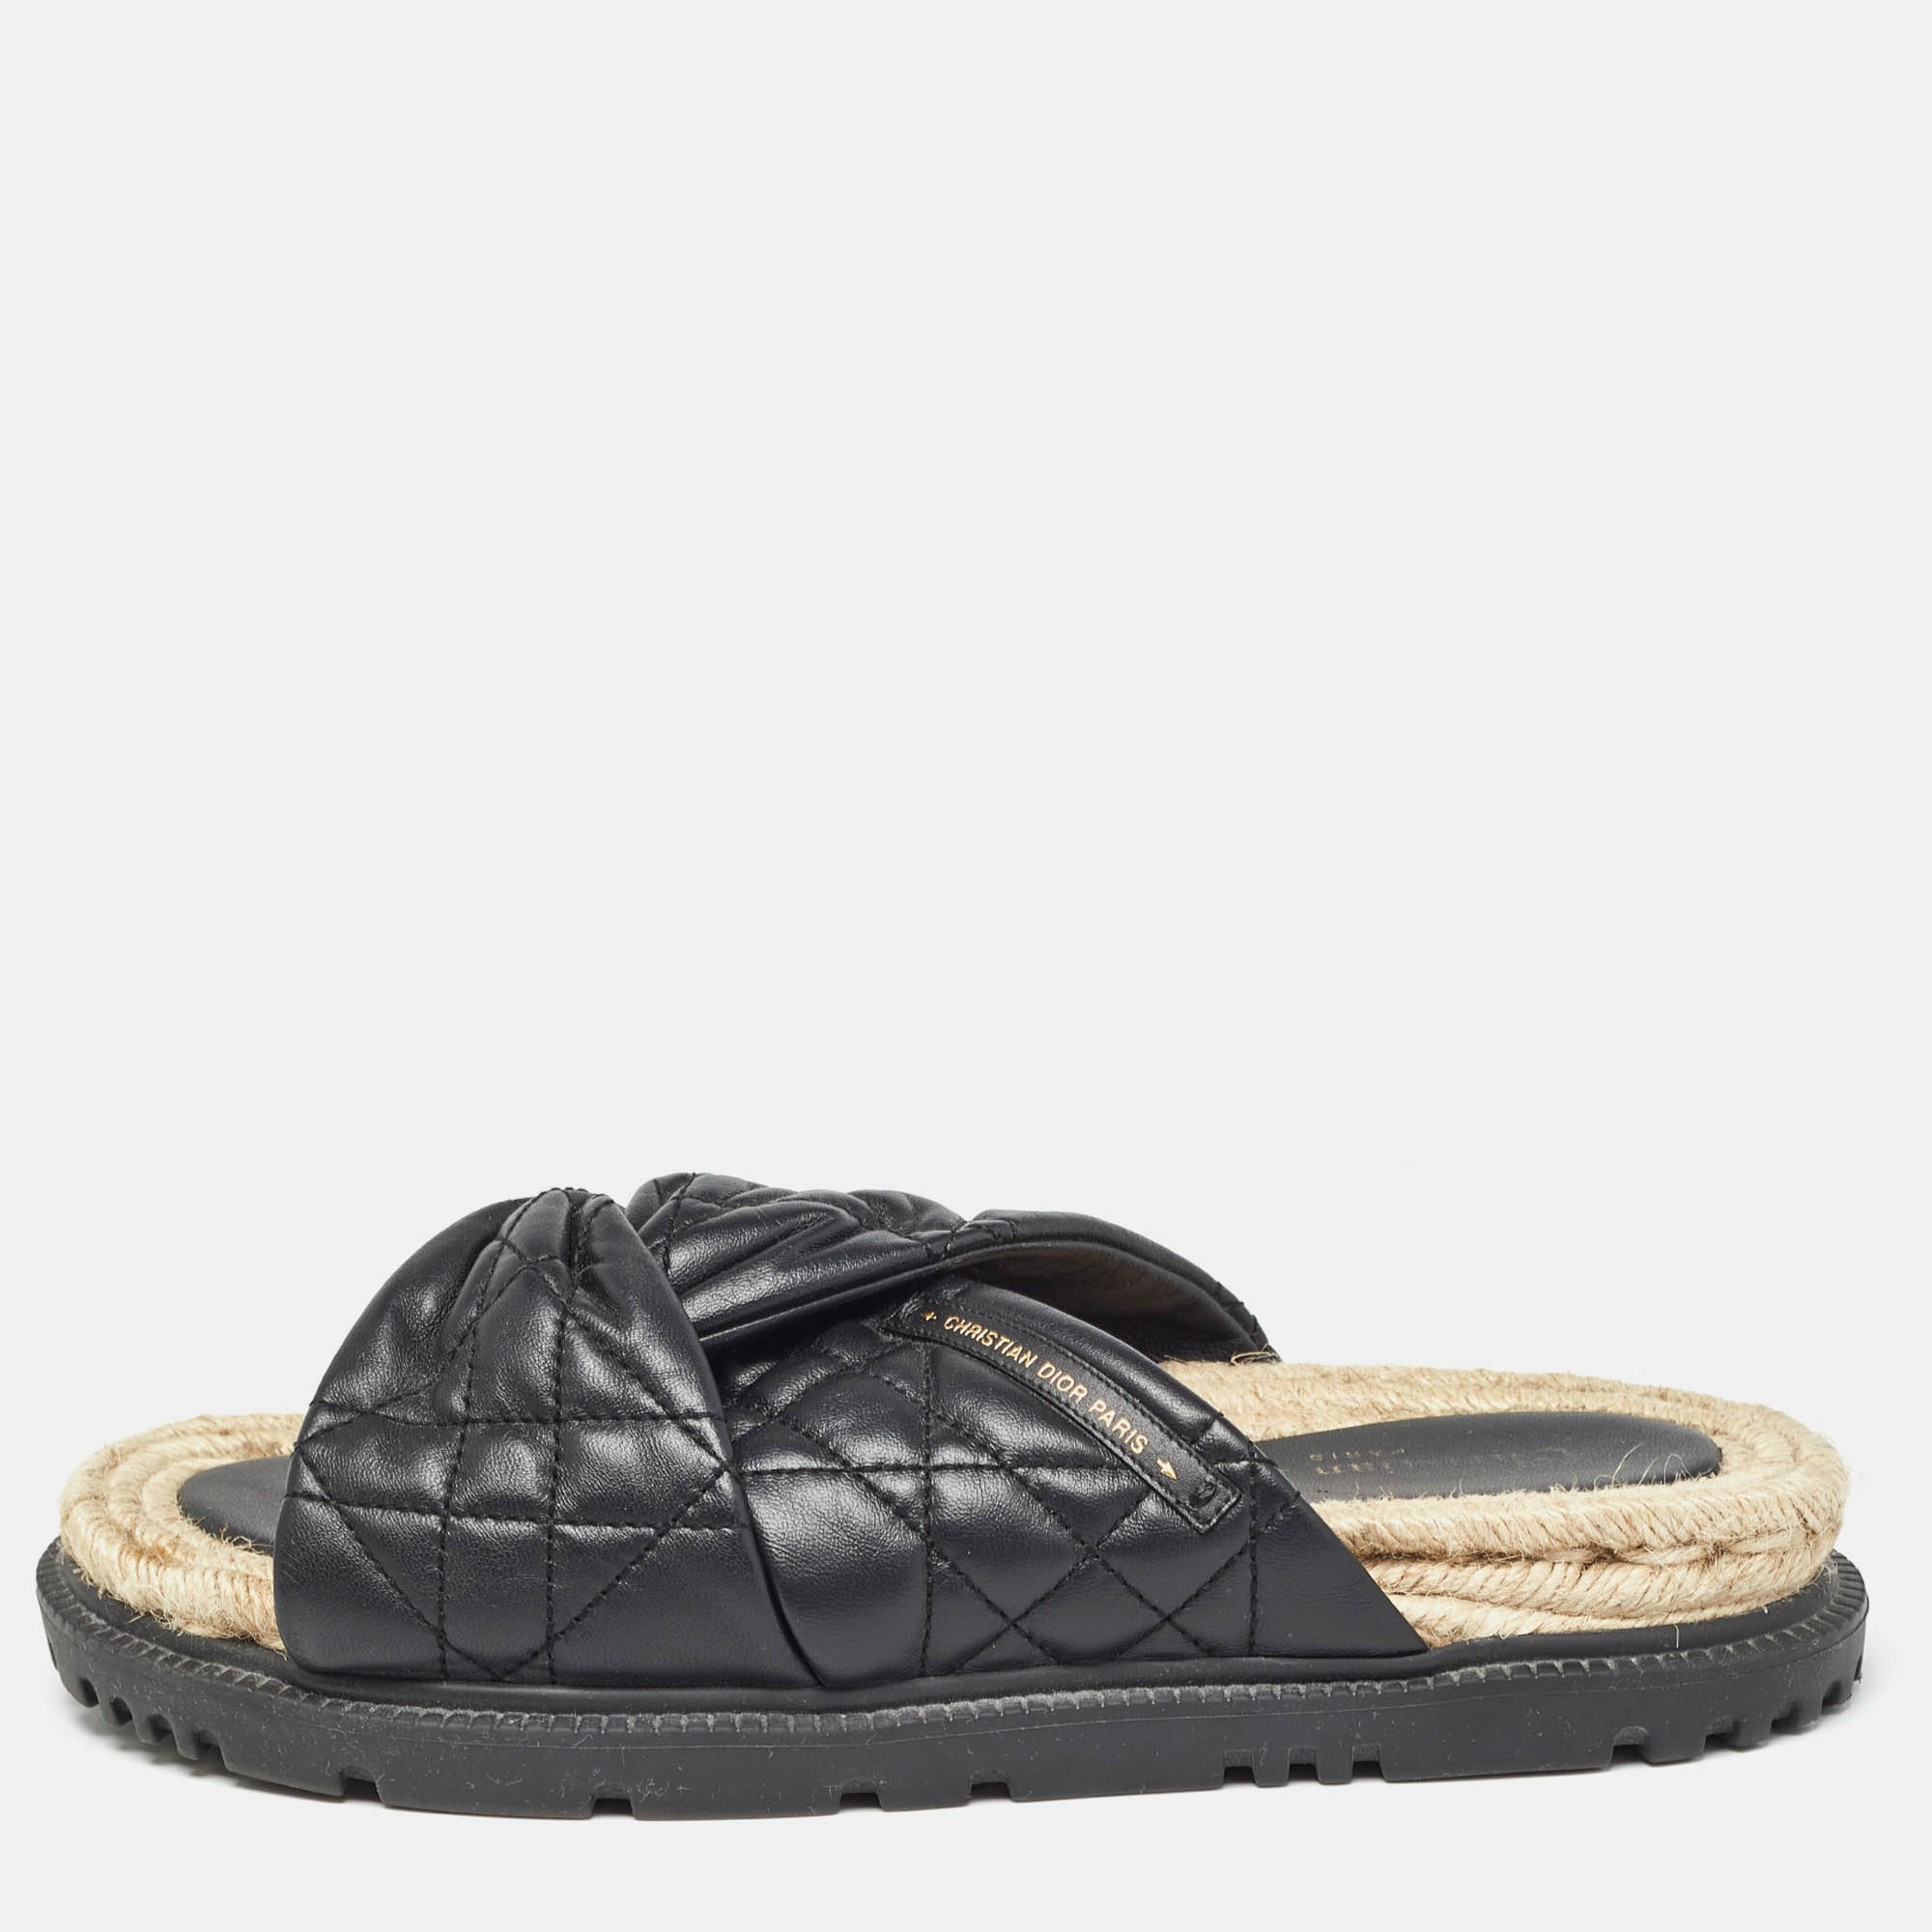 Dior black cannage leather d-twist espadrille sandals size 40